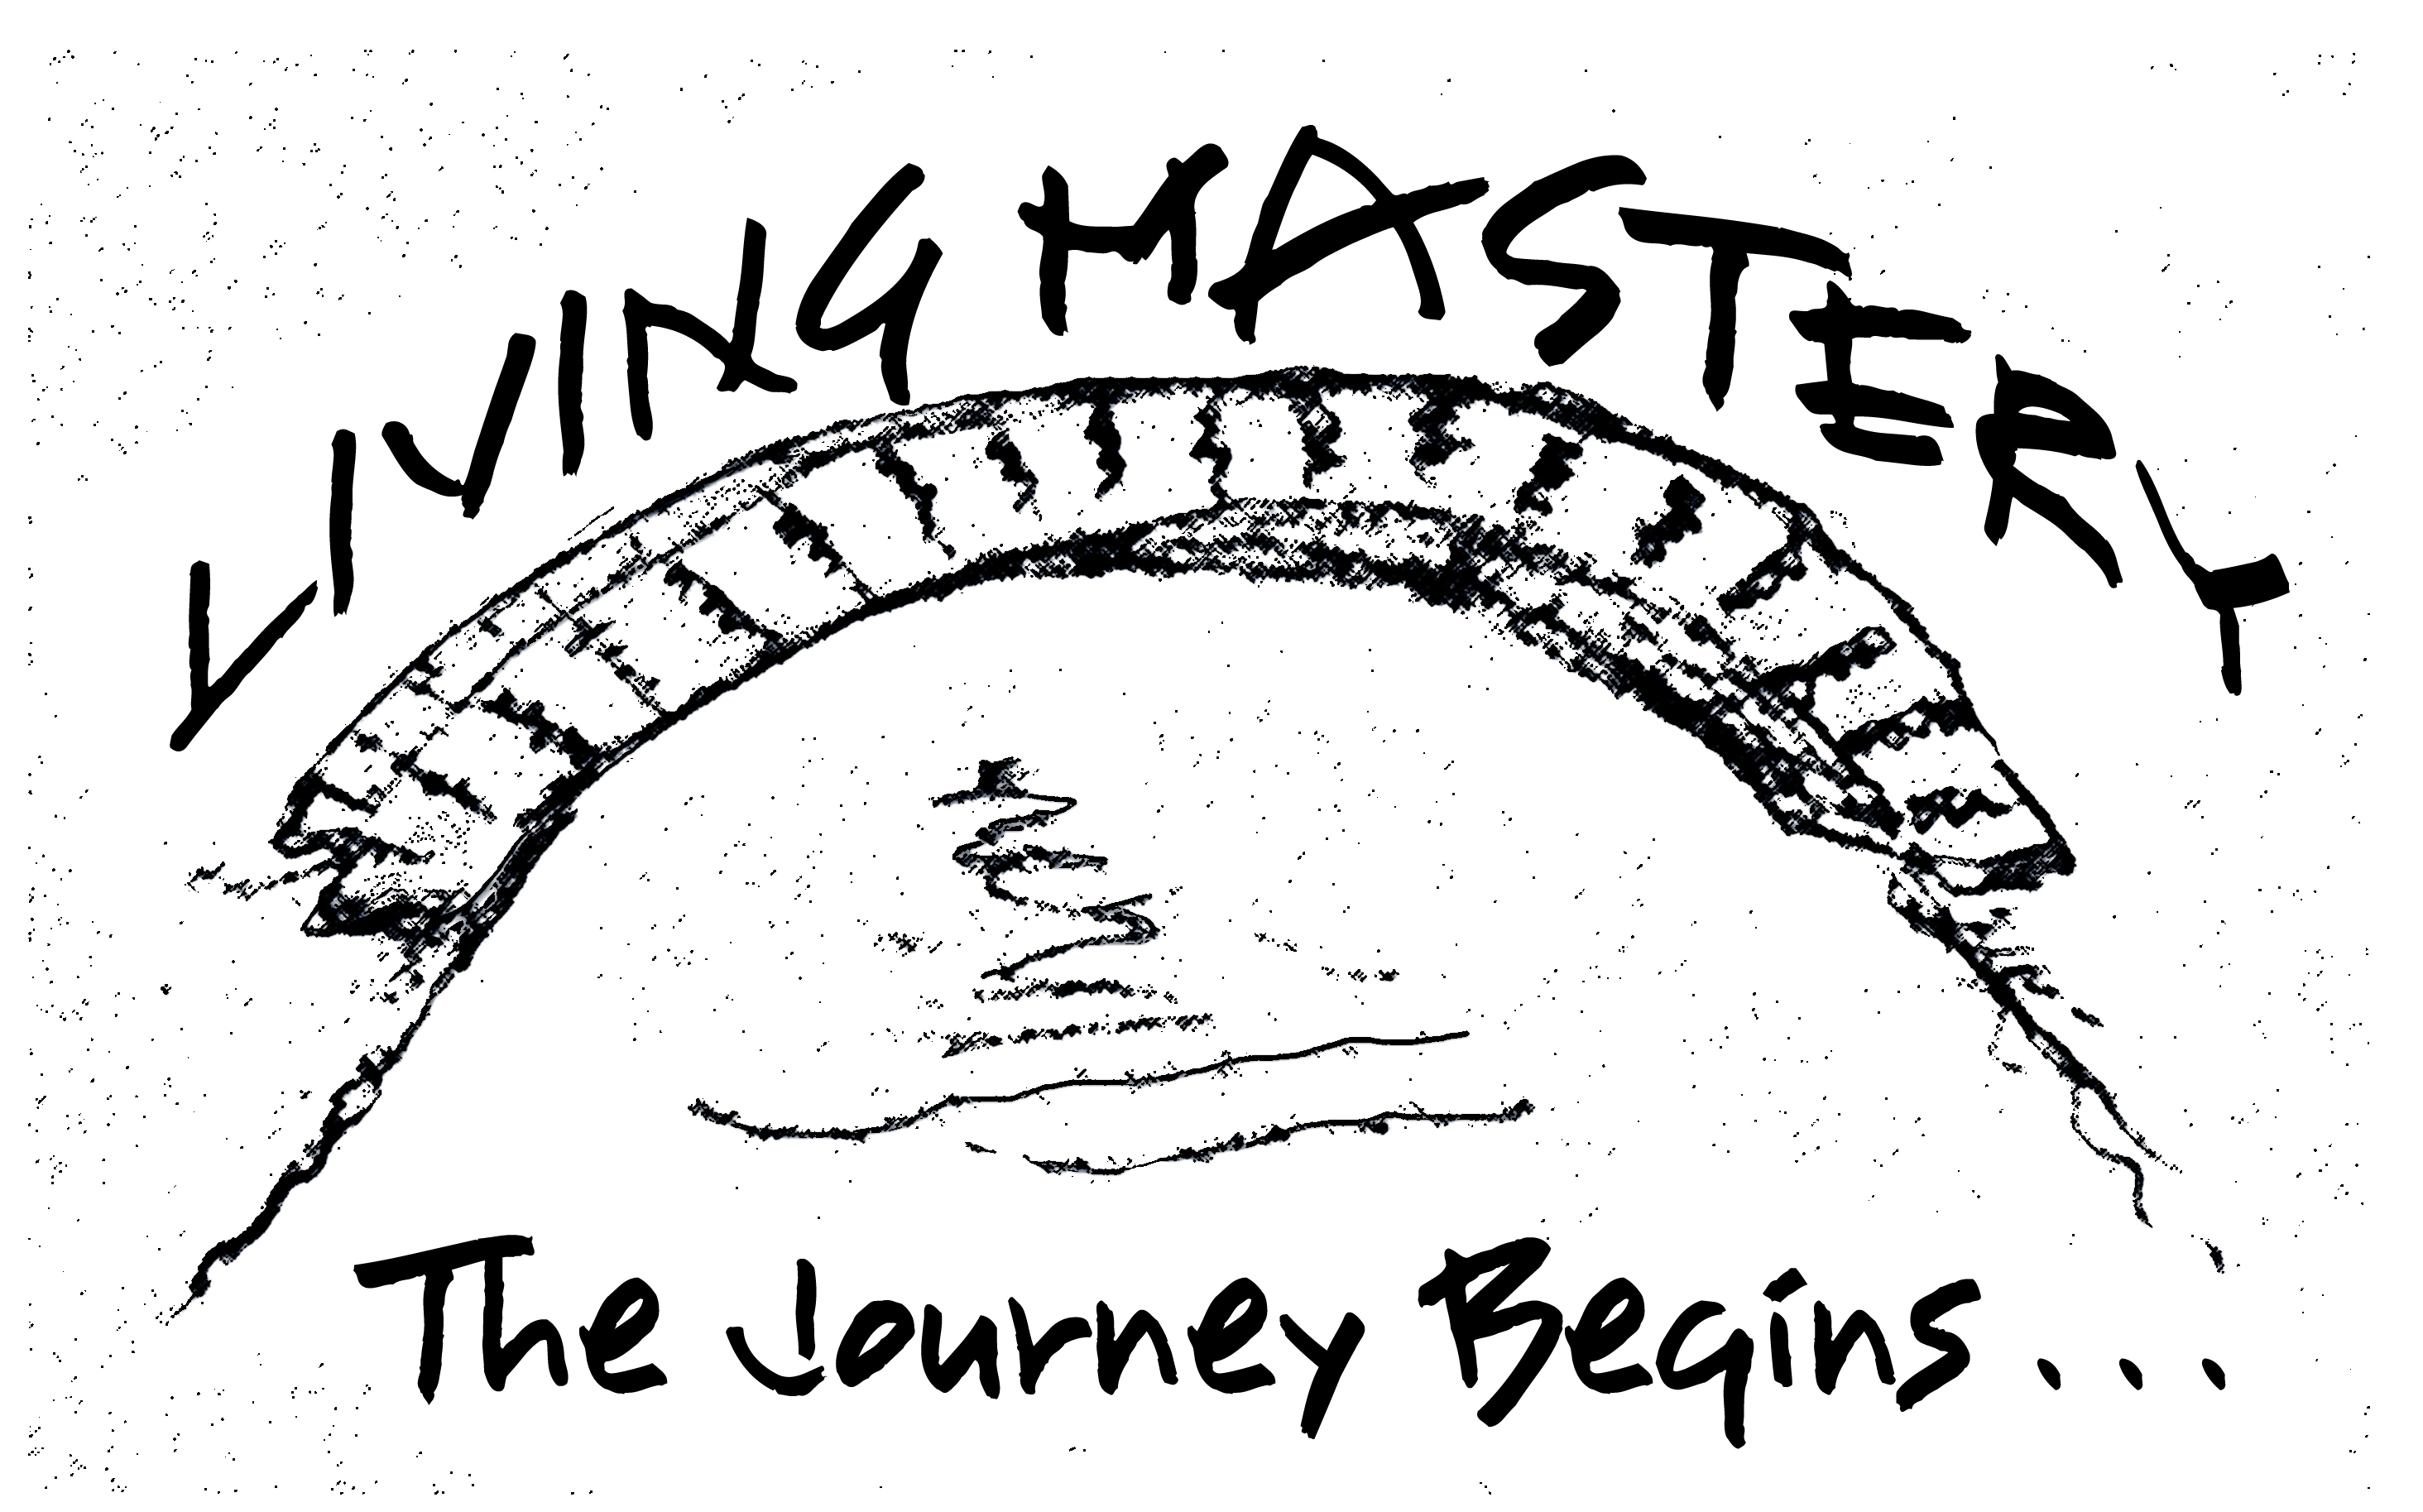 Living Self Mastery (LSM)